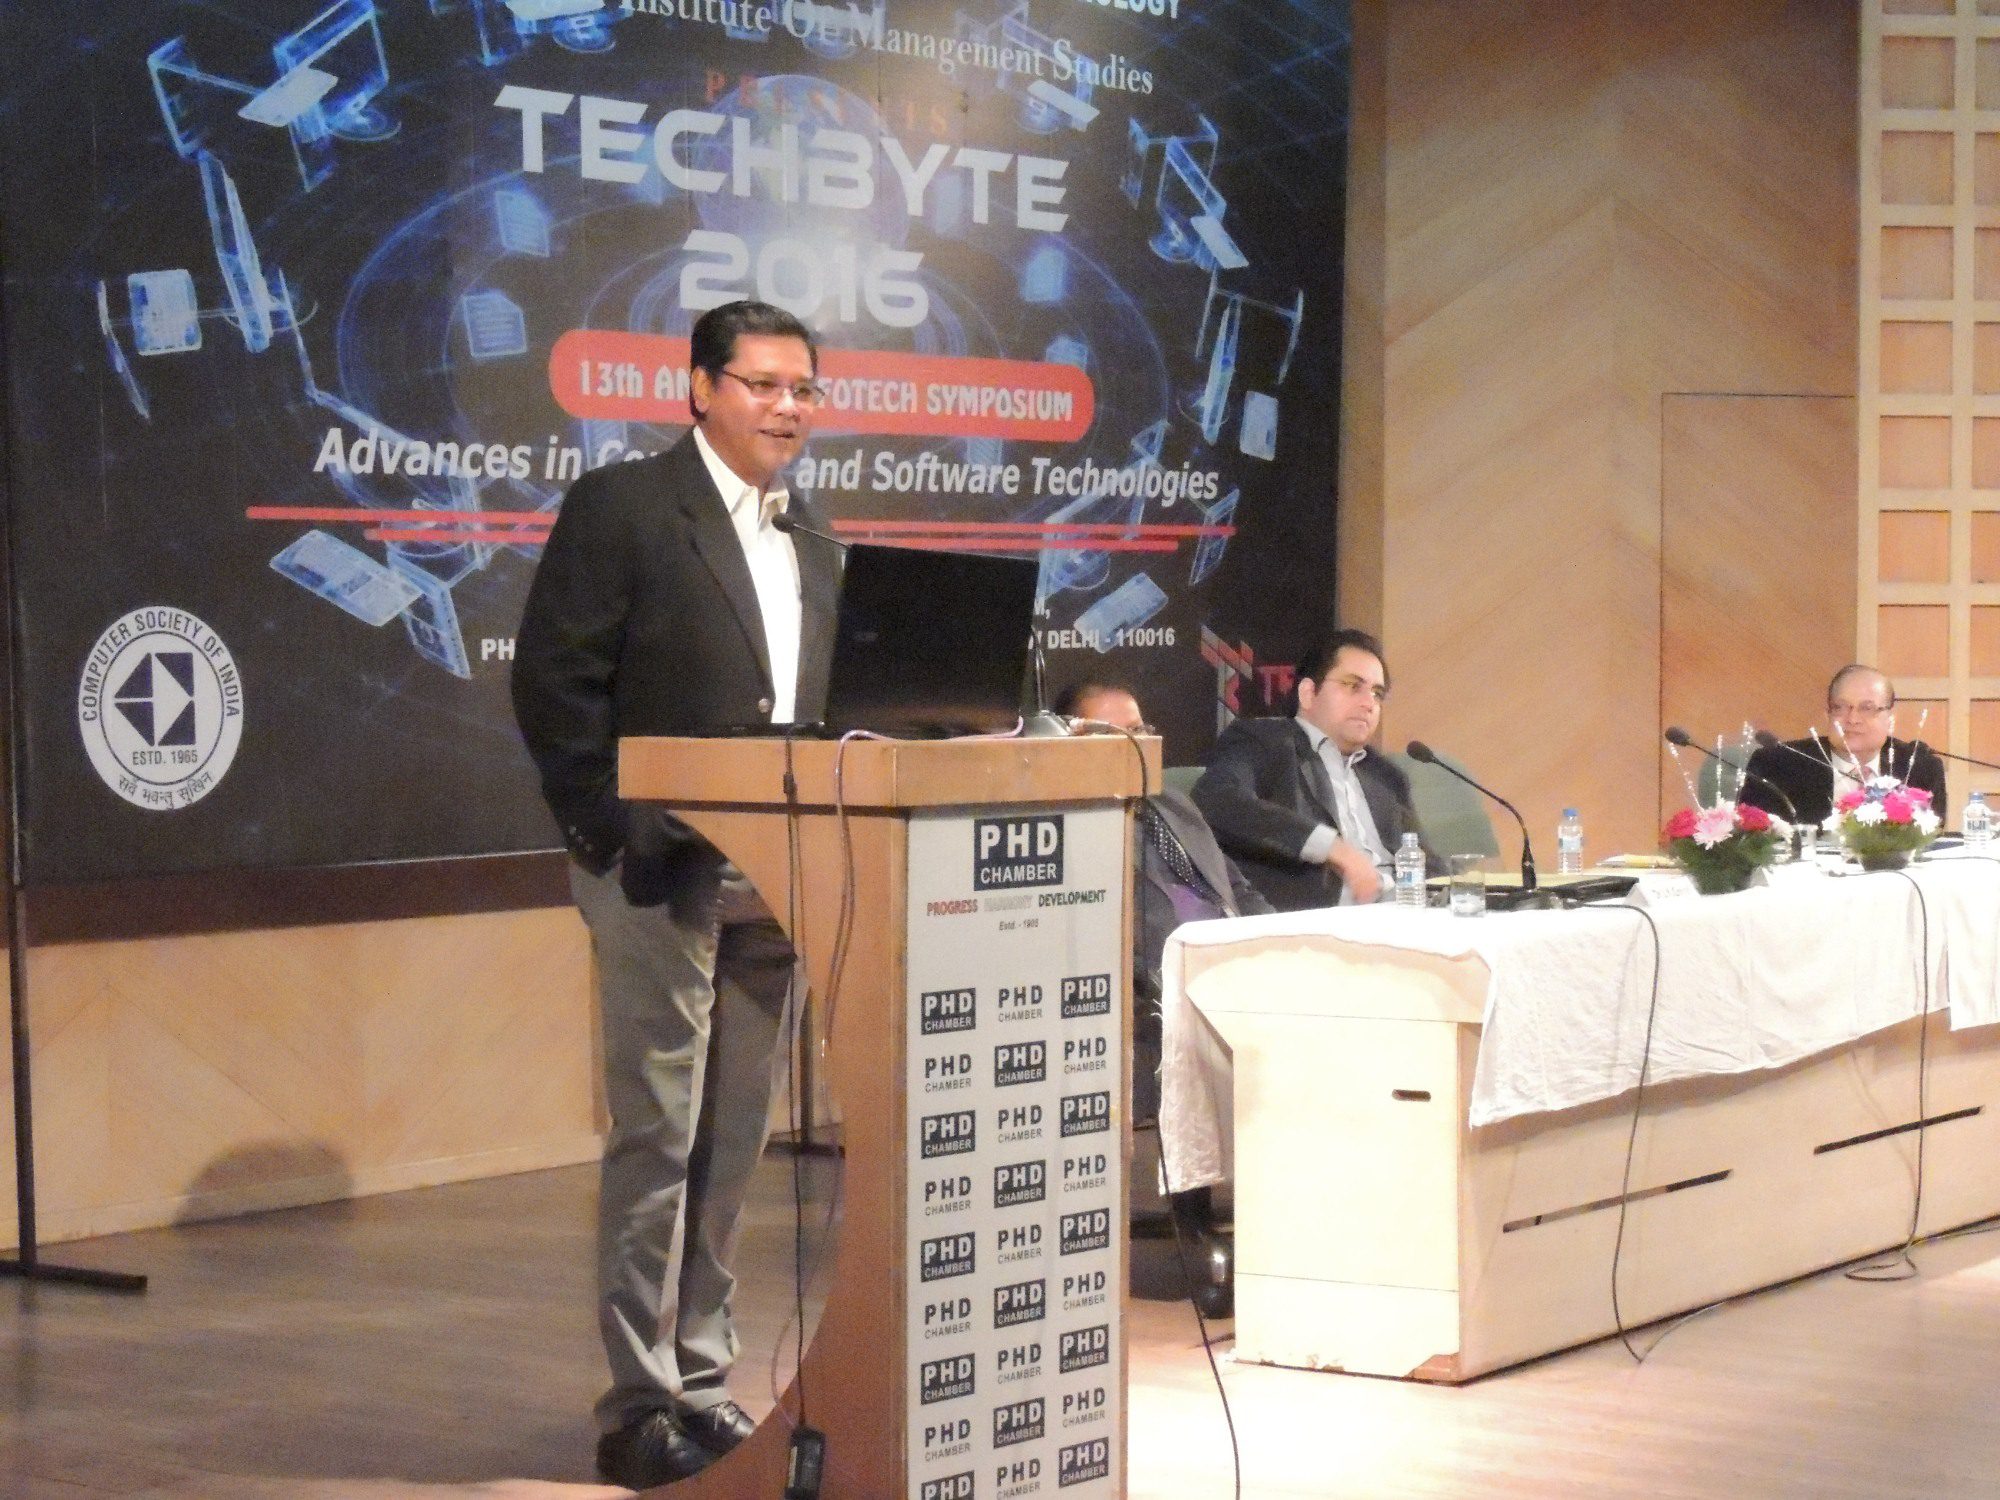 JIMS Rohini organized 13th Annual IT symposium “TECHBYTE 2016”